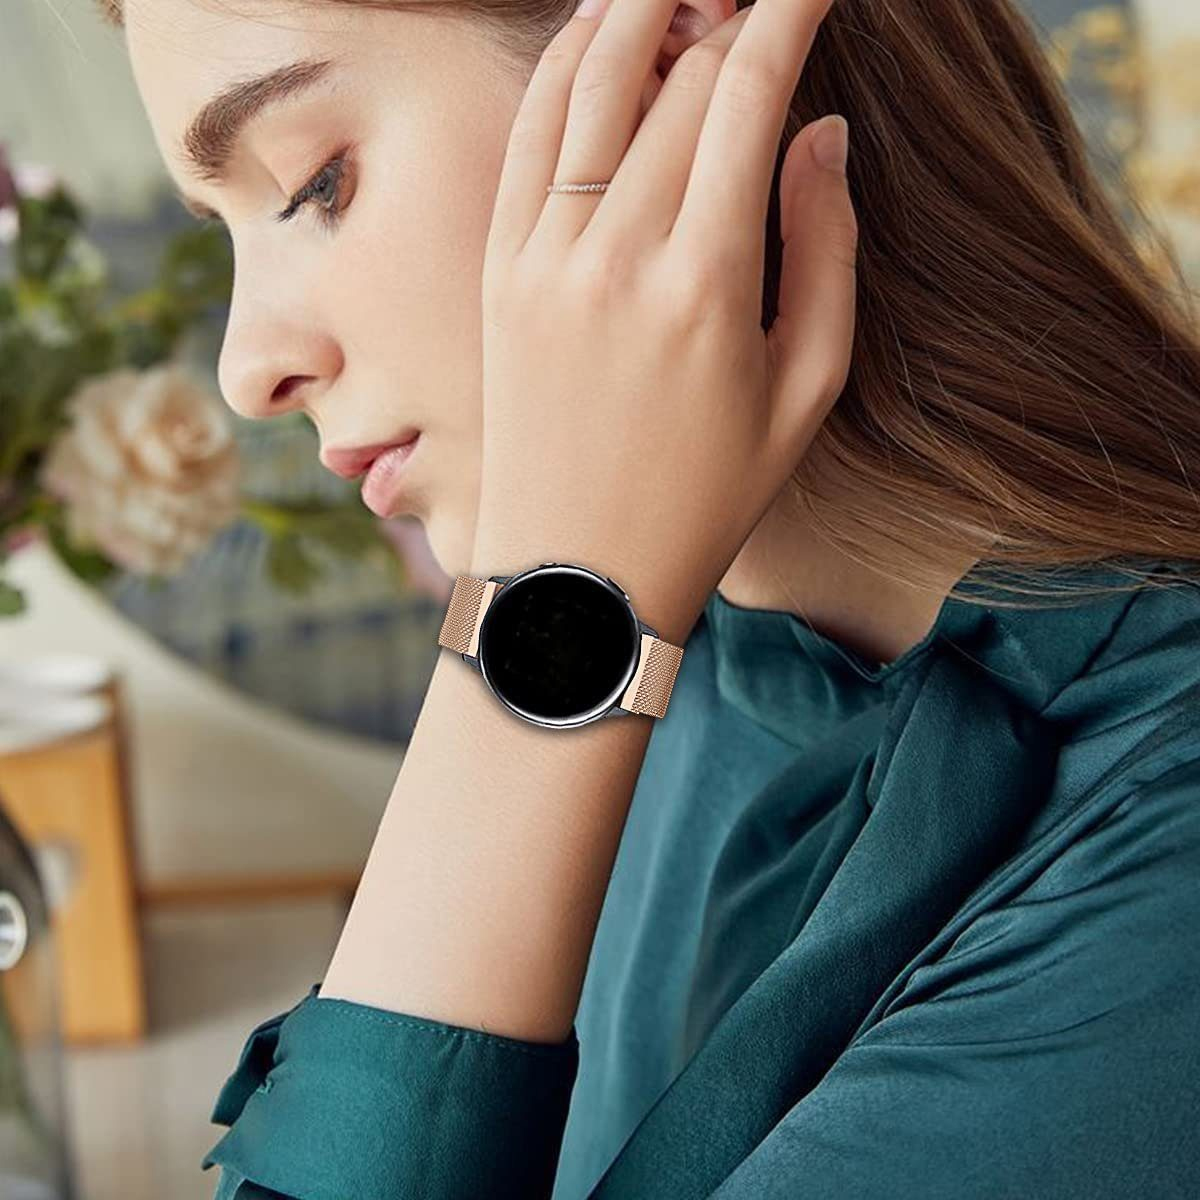 DIIDA Smartwatch Watch Band,Uhrenarmbänder,Huawei Watch Huawei, Ersatzarmband, Roségold 22mm, Milan-Armband,22mm, GT2